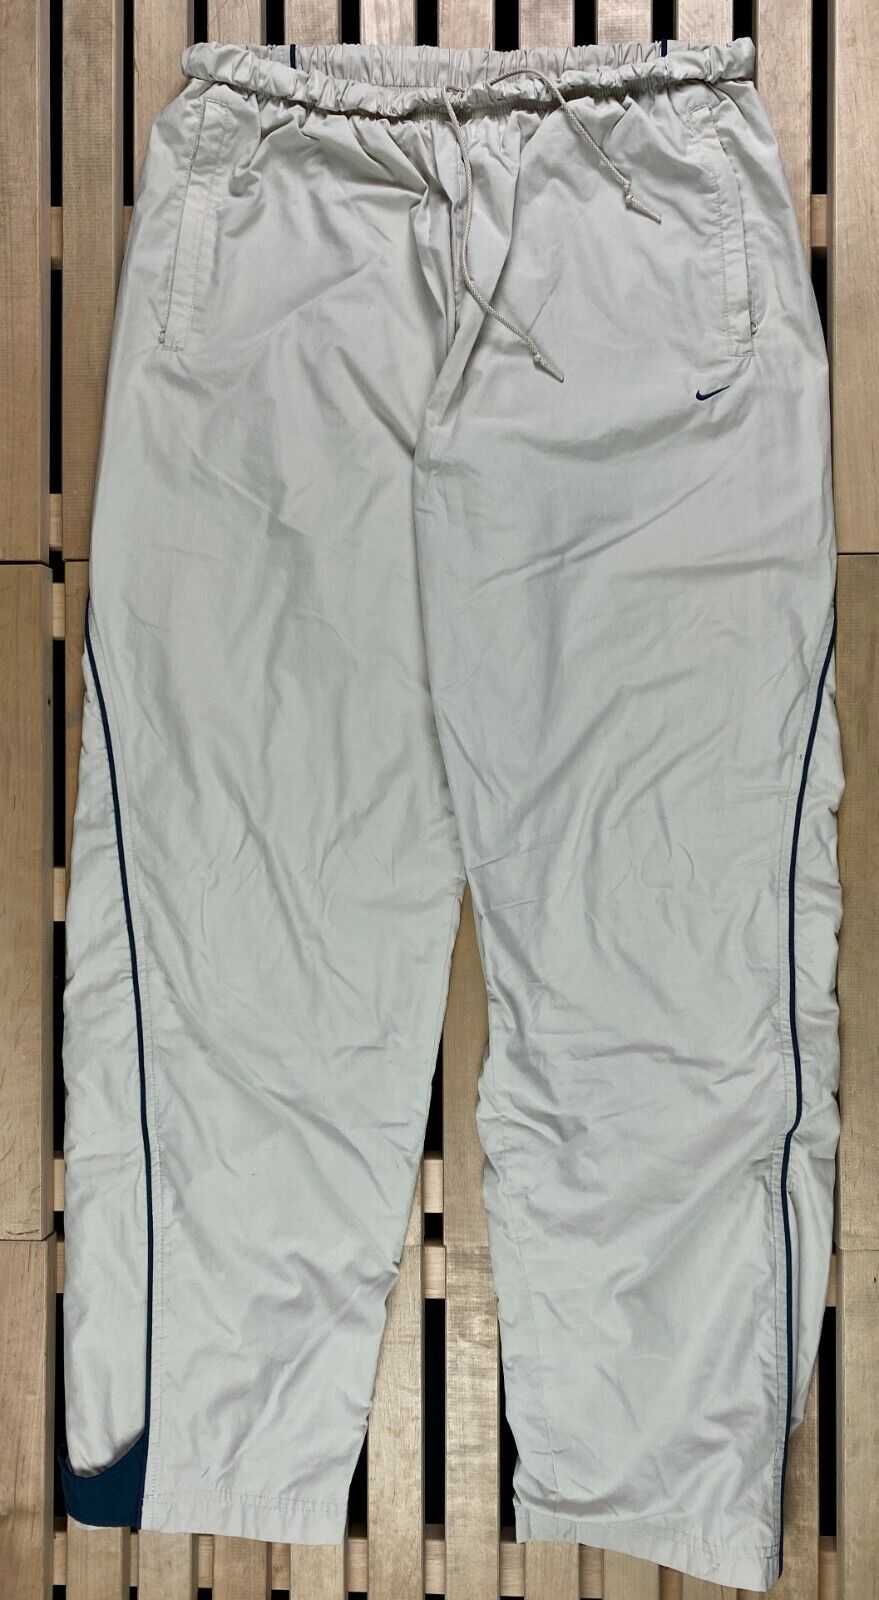 Kith New York Knicks Nike Track Pants Size XXL OOP | eBay